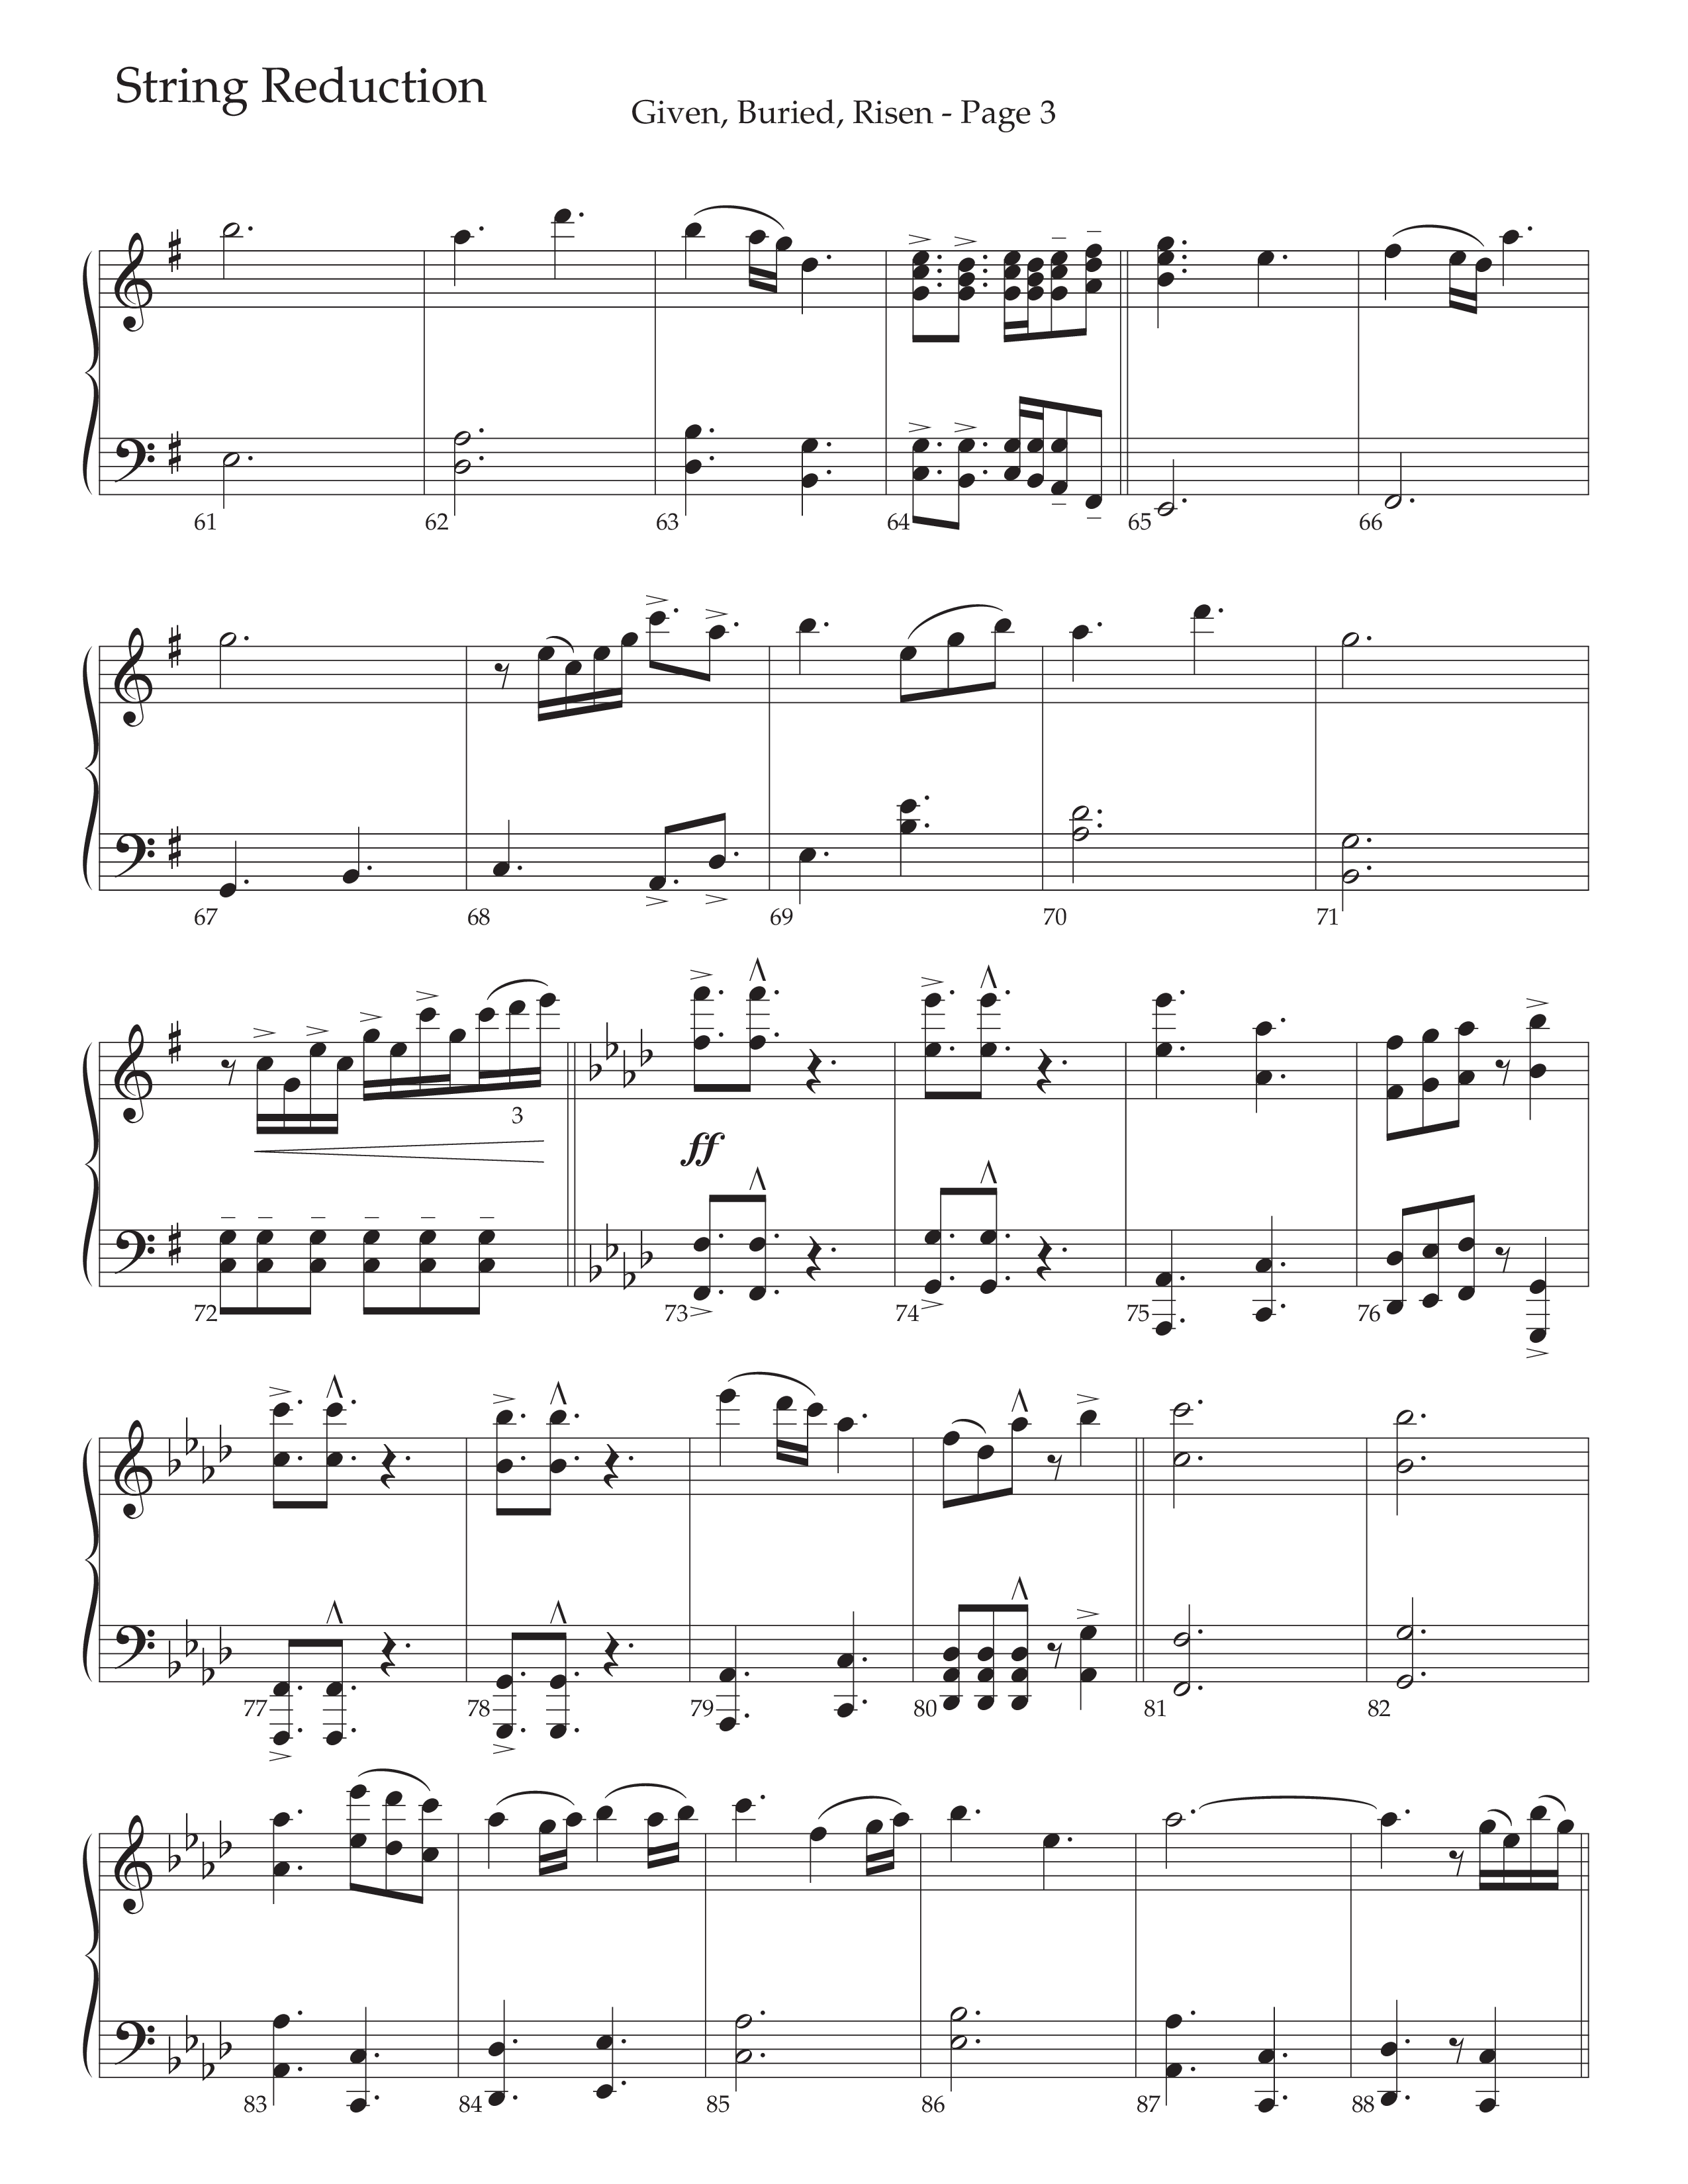 Given Buried Risen (Choral Anthem SATB) String Reduction (Daywind Worship / Arr. Phil Nitz)